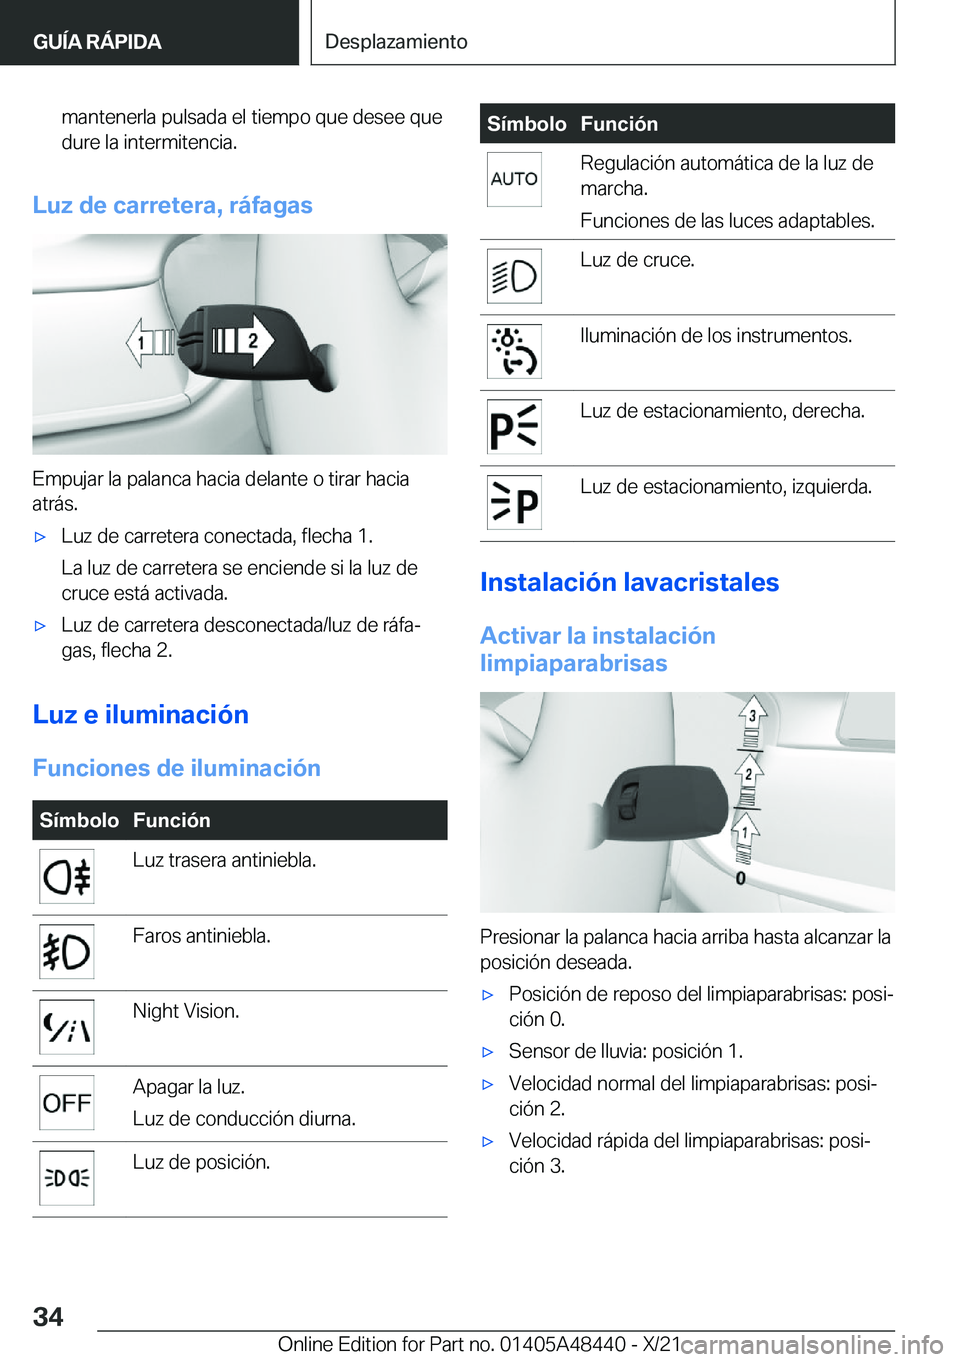 BMW X7 2022  Manuales de Empleo (in Spanish) �m�a�n�t�e�n�e�r�l�a��p�u�l�s�a�d�a��e�l��t�i�e�m�p�o��q�u�e��d�e�s�e�e��q�u�e
�d�u�r�e��l�a��i�n�t�e�r�m�i�t�e�n�c�i�a�.
�L�u�z��d�e��c�a�r�r�e�t�e�r�a�,��r�